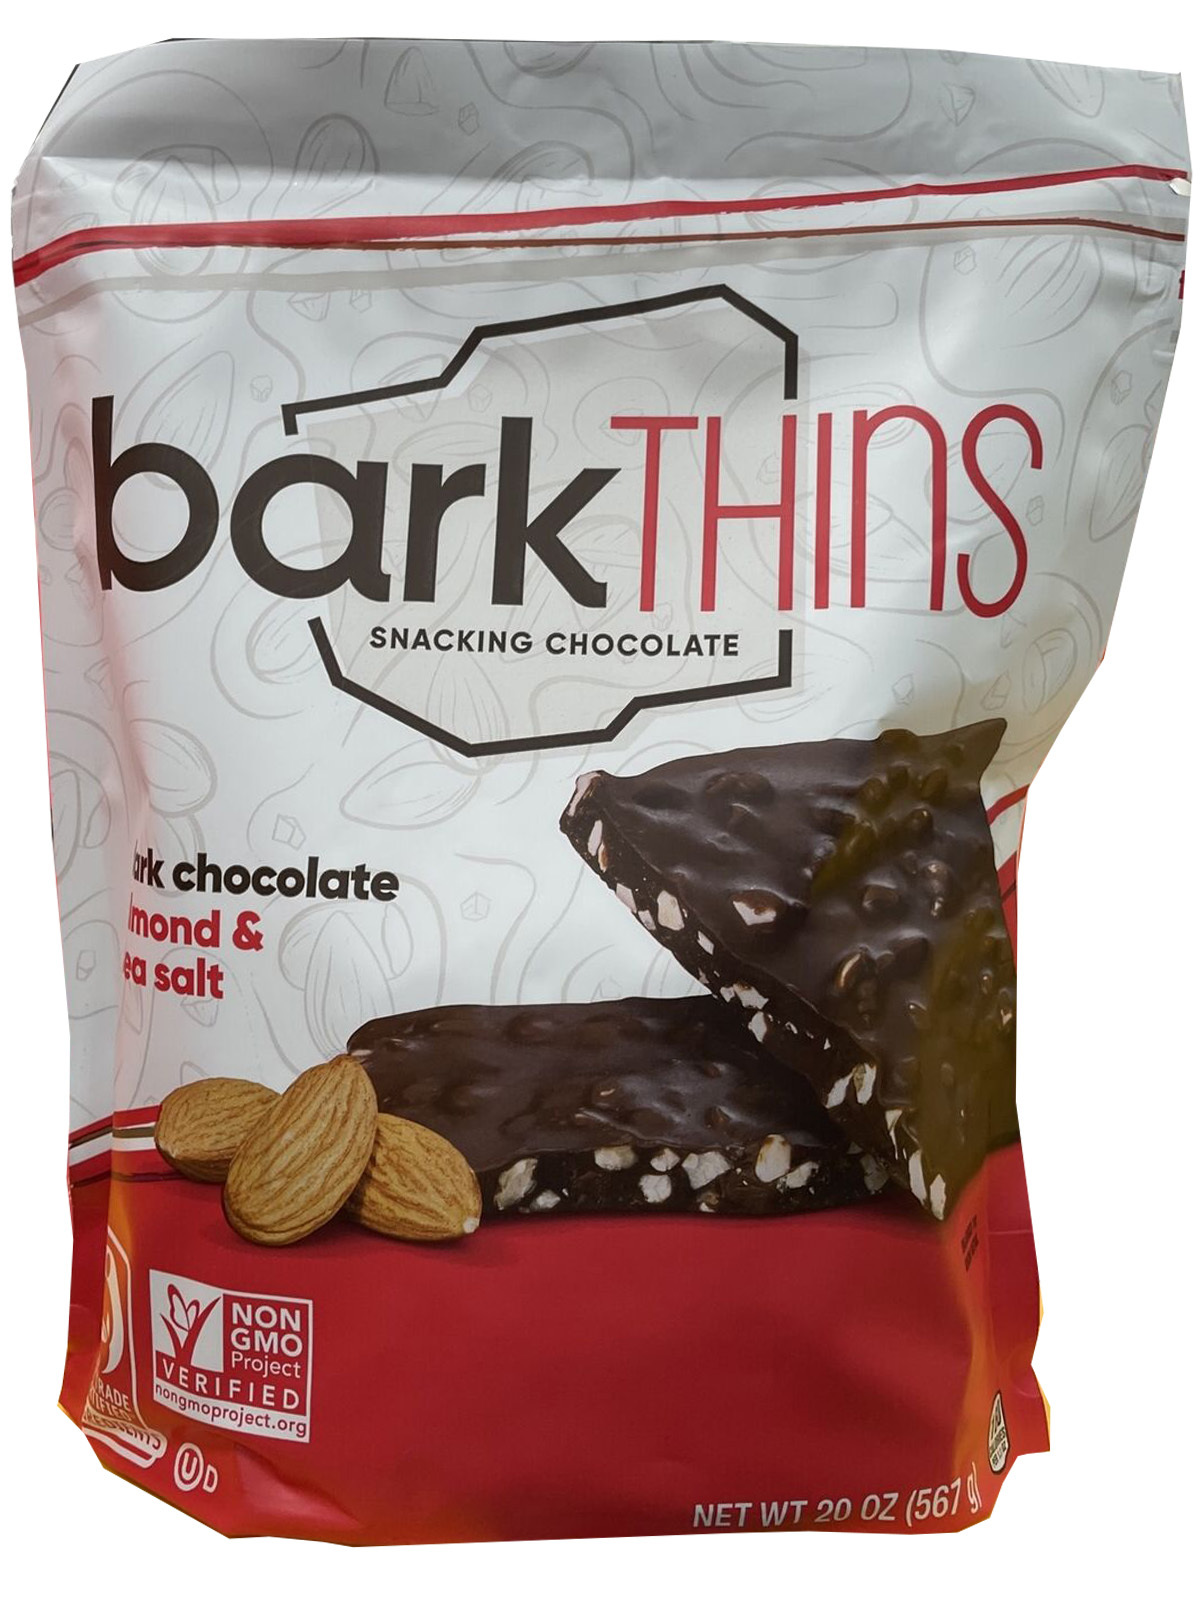 Barkthins Snacking Chocolate, Dark Chocolate Almond with Sea Salt, 20 oz